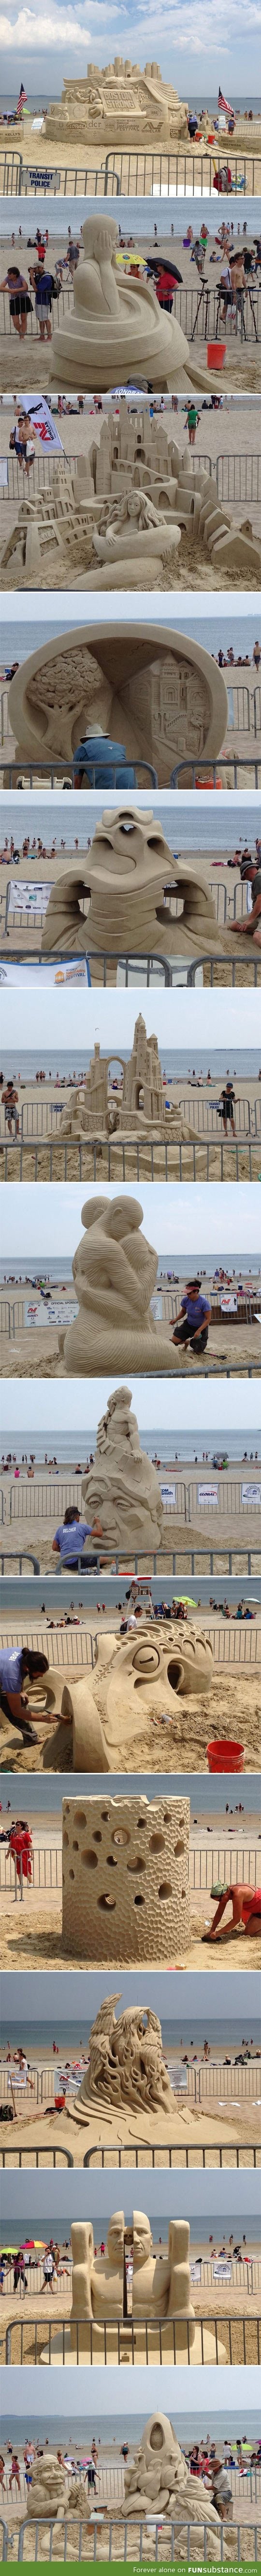 Revere beach sand sculpting festival, the octopus was the winner